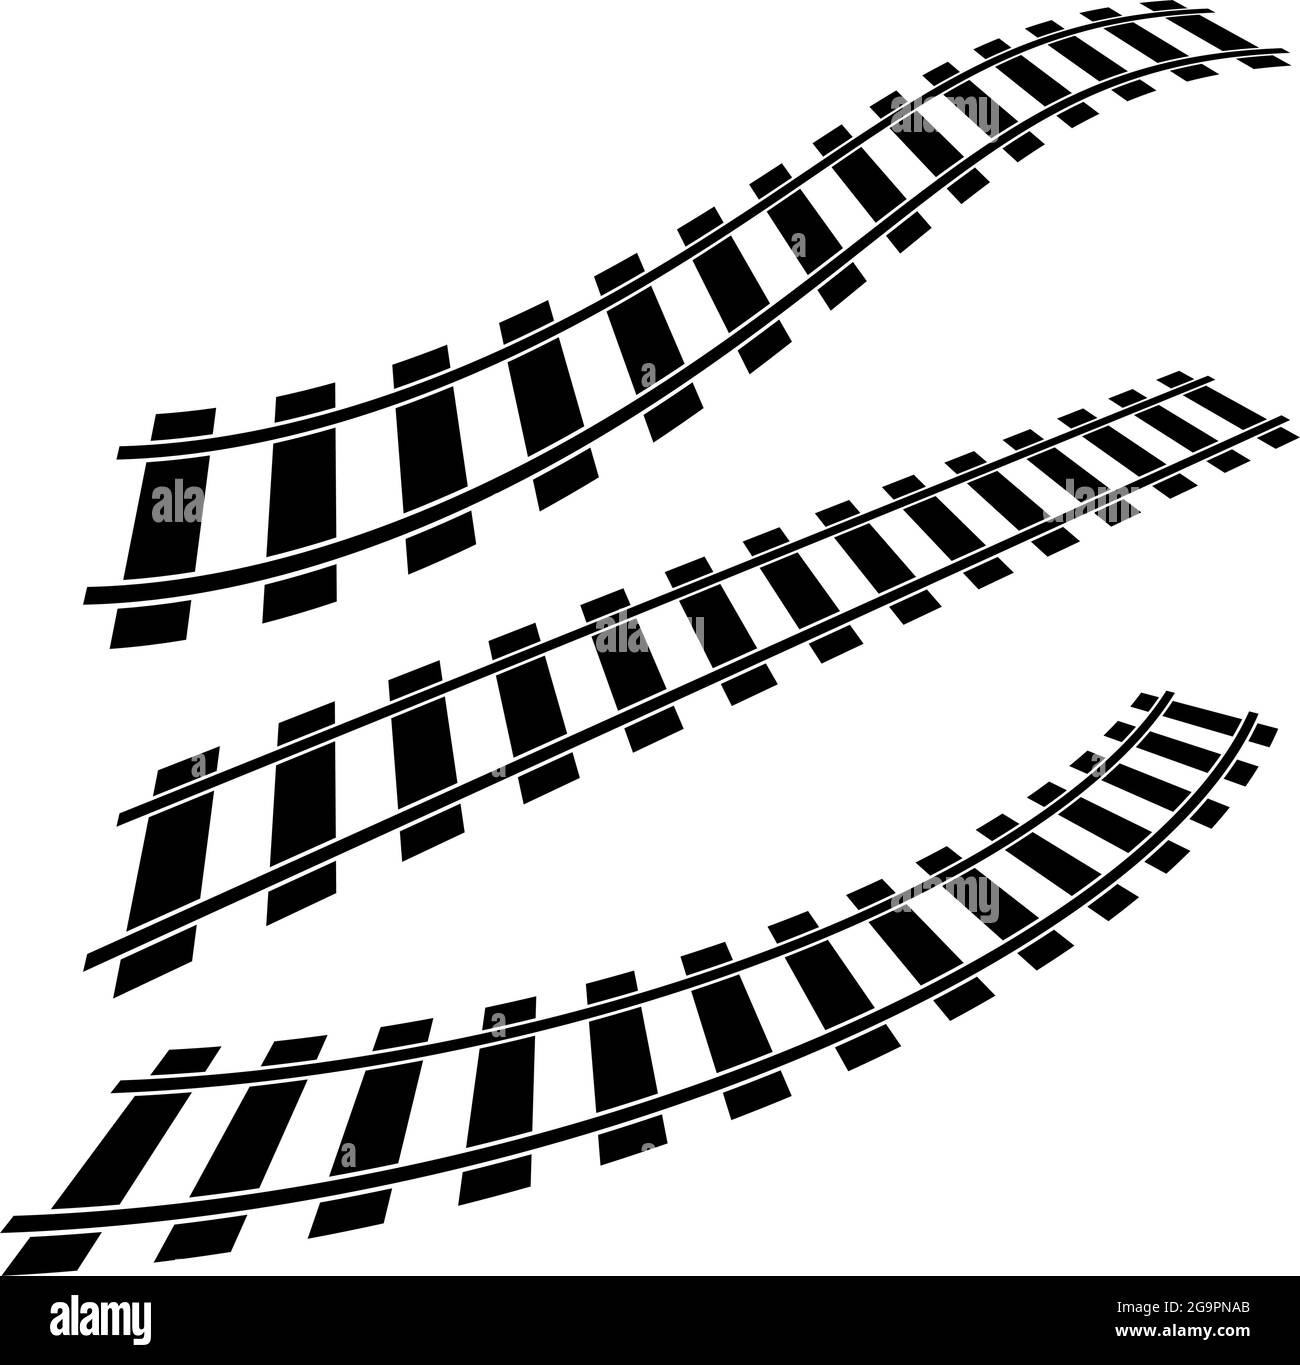 Train track, rail way silhouette element – stock vector illustration, clip-art graphics Stock Vector